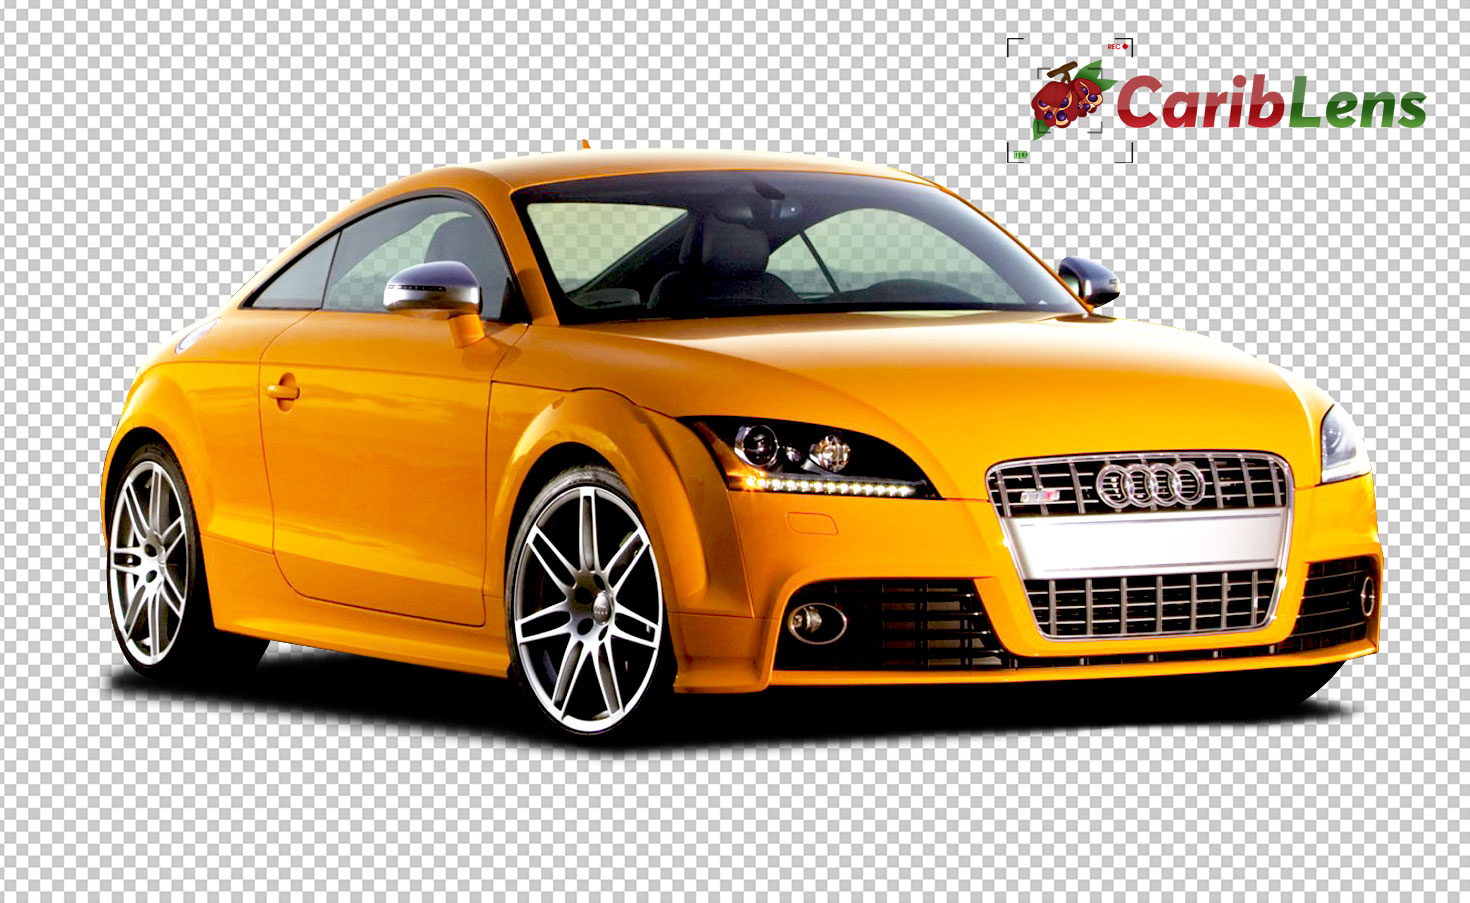 Yellow Audi Car Png Free Image Download